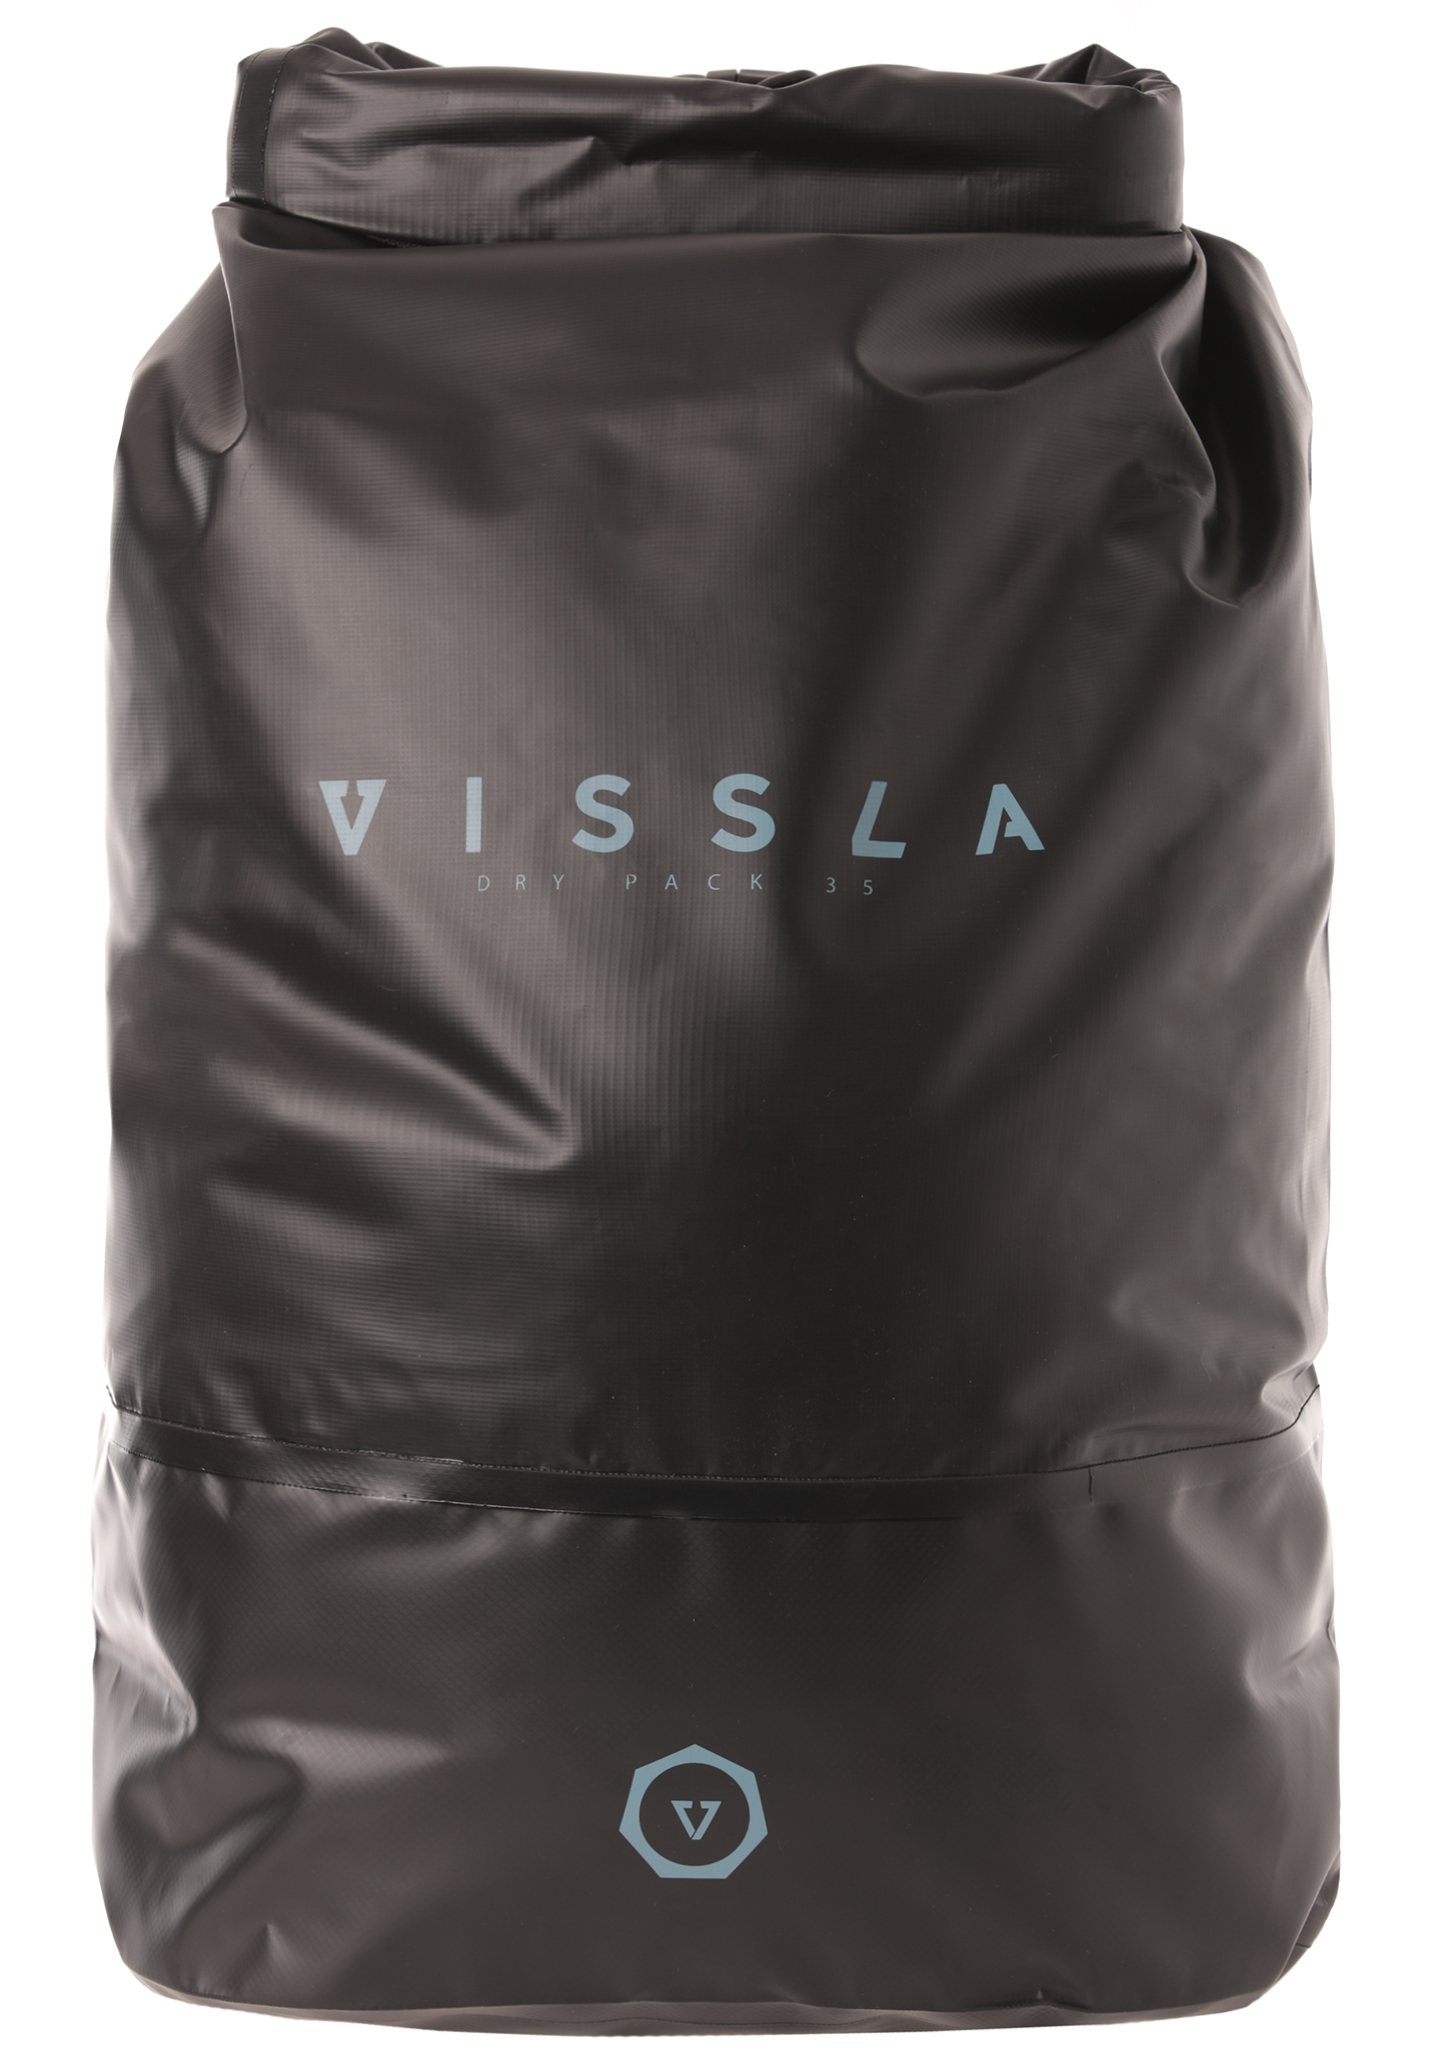 Vissla 7 Seas Dry Backpack 35L Rucksack black One Size